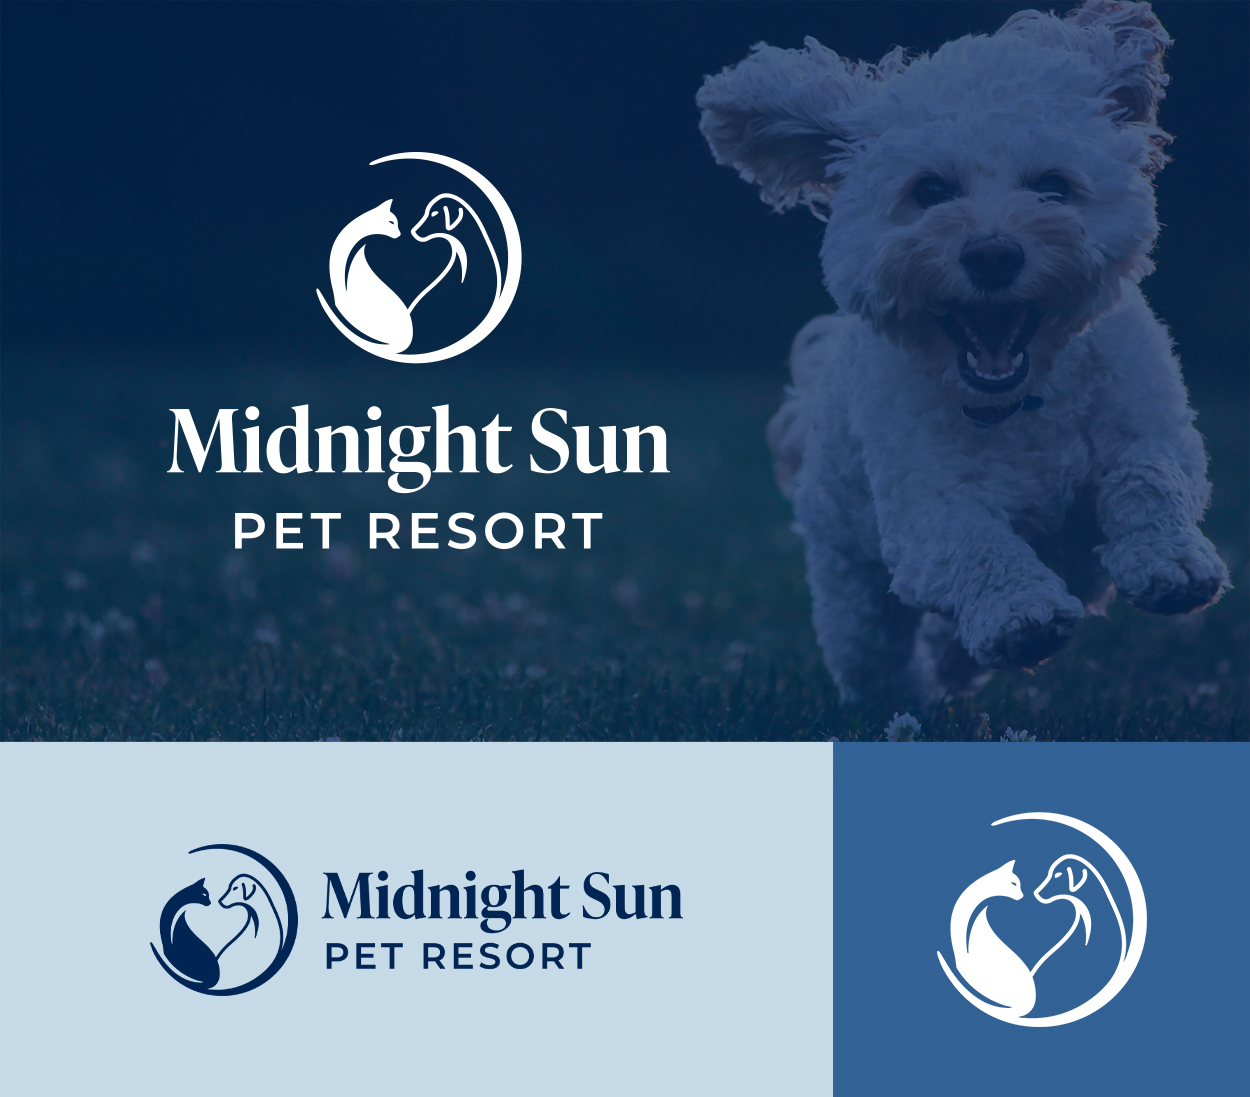 Midnight Sun Pet Resort Logo Shown in the Three Different Layout Variations